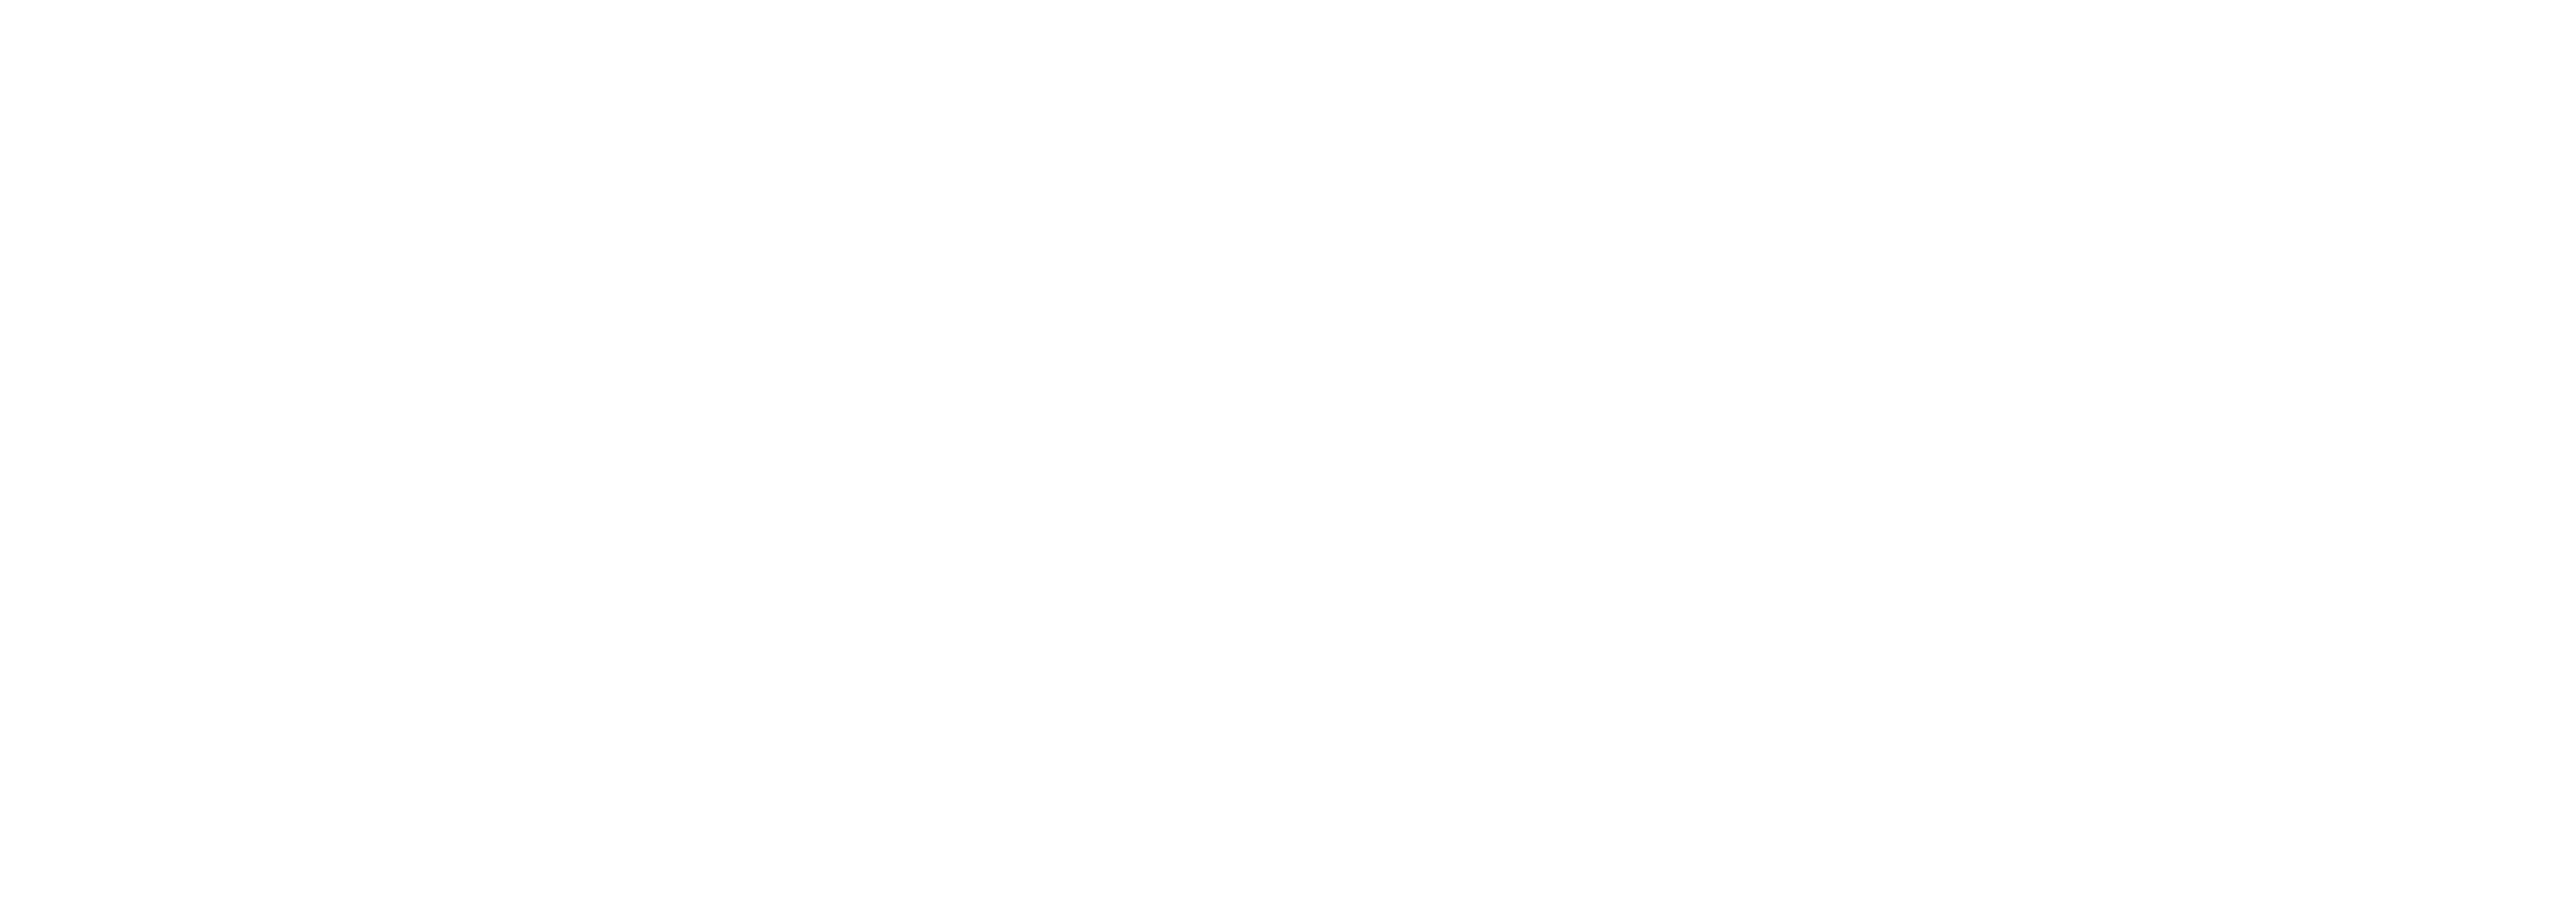 Logos - Imagen UDD